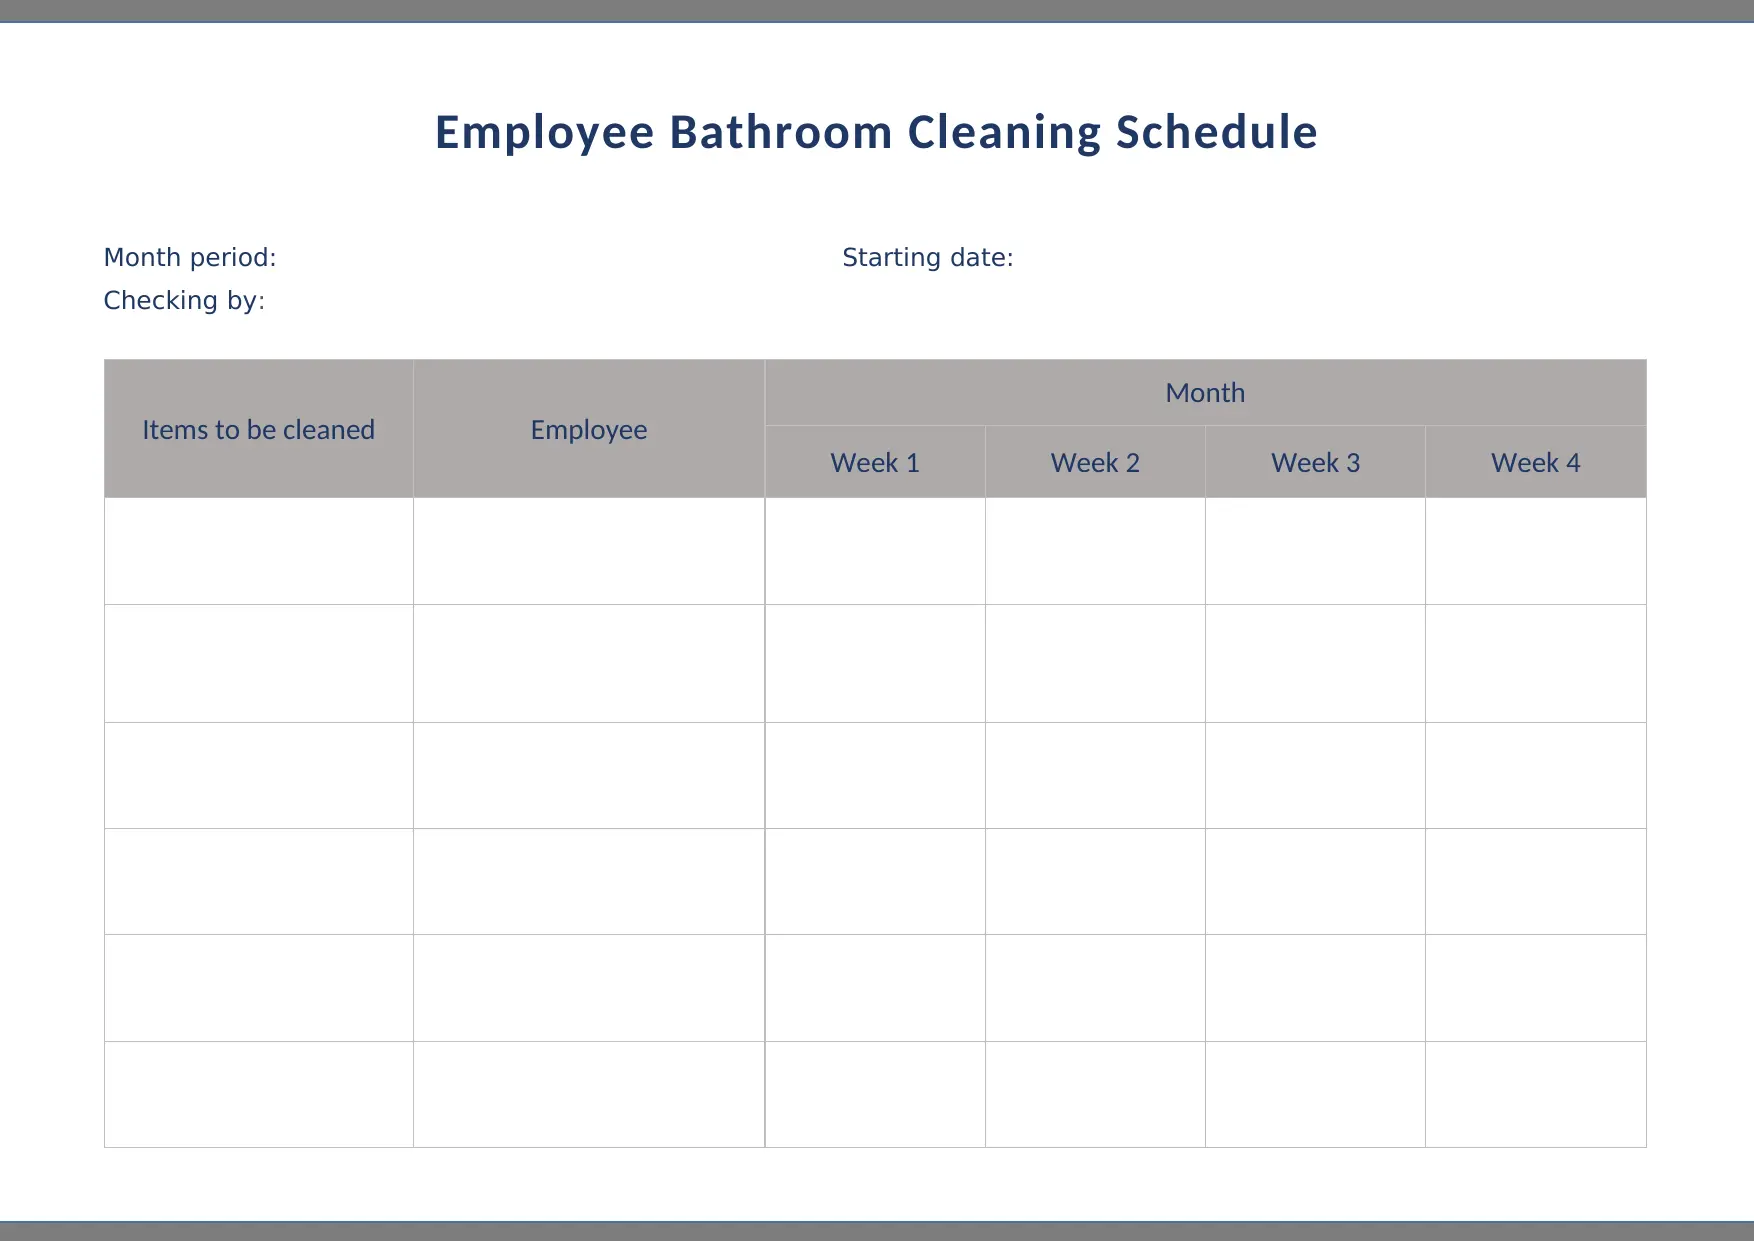 Employee Bathroom Cleaning Schedule Template